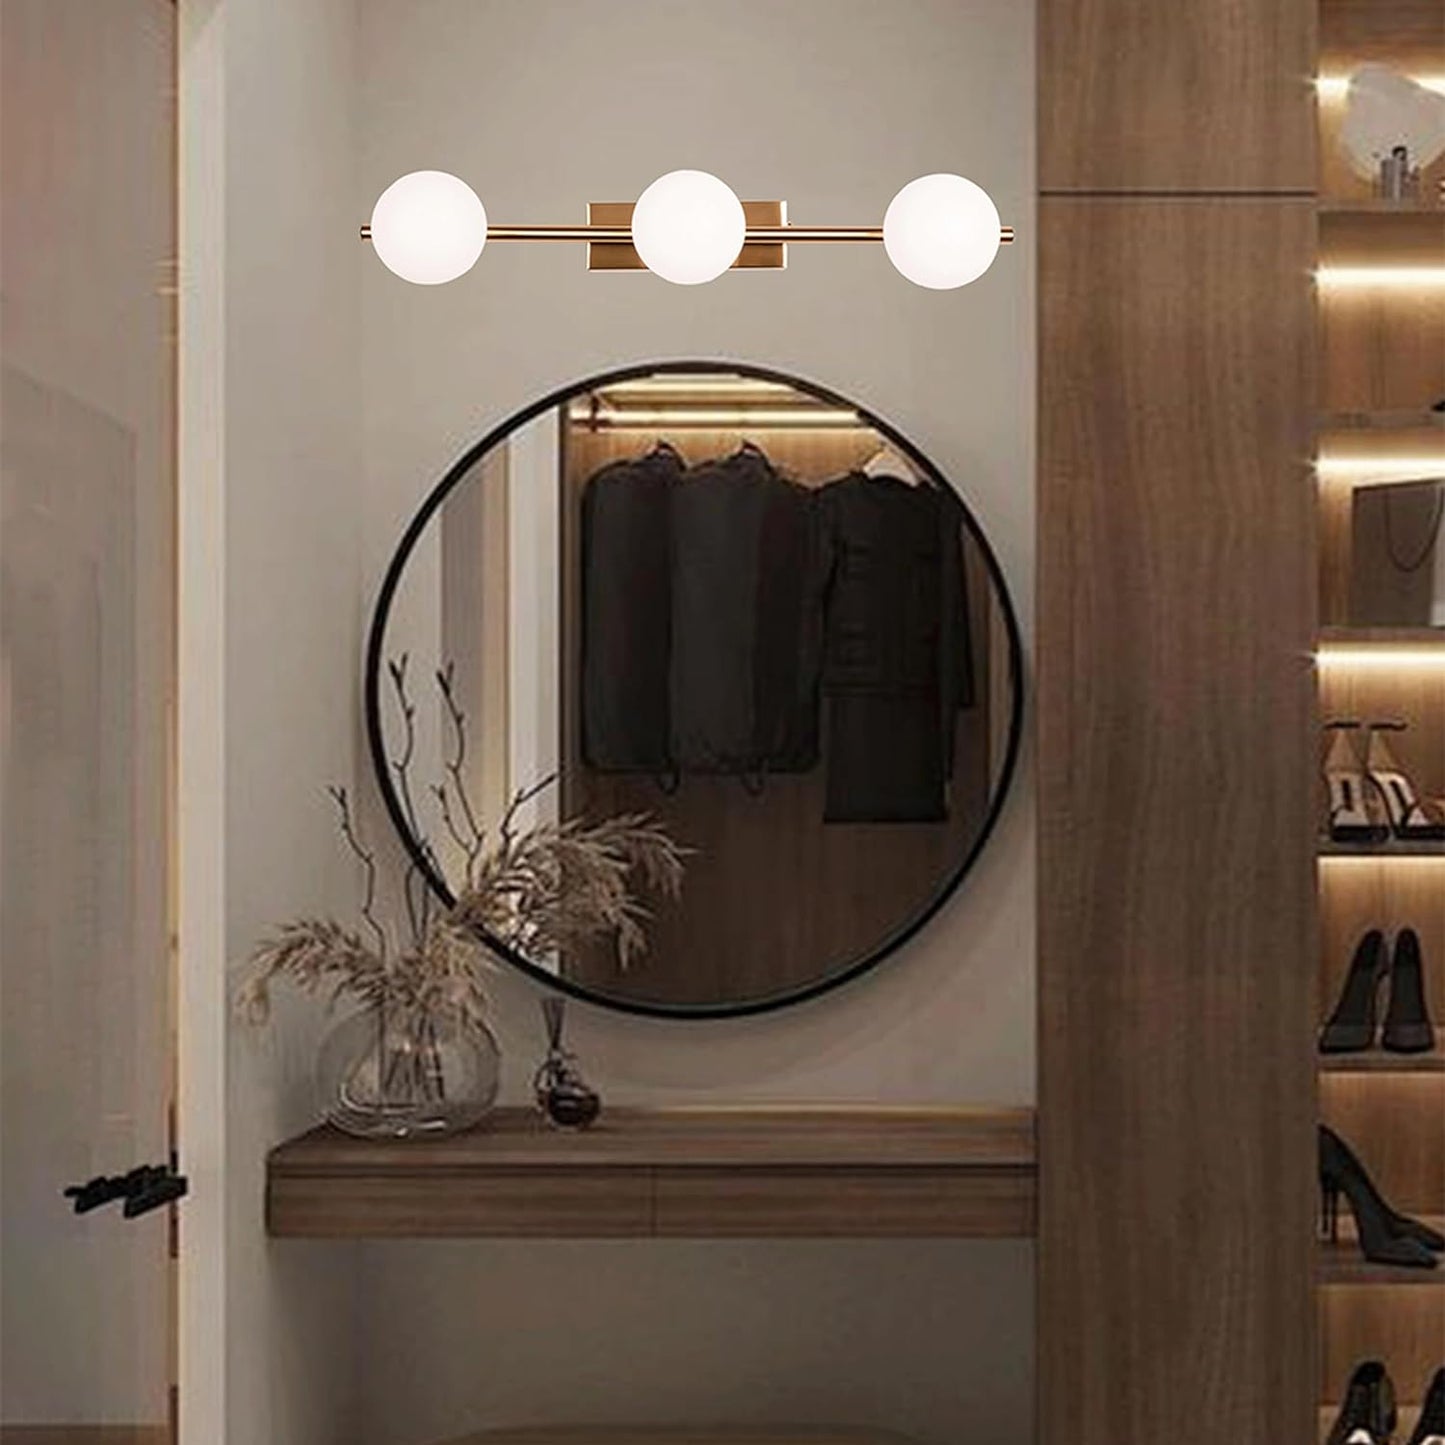 AHUJA INTERNATIONAL Modern Led Wall Sconce 3-Light Bathroom Vanity Light, Industrial Wall Bathroom Lighting Over Mirror, Milk White Glass Shade Bedside Wall Lamp